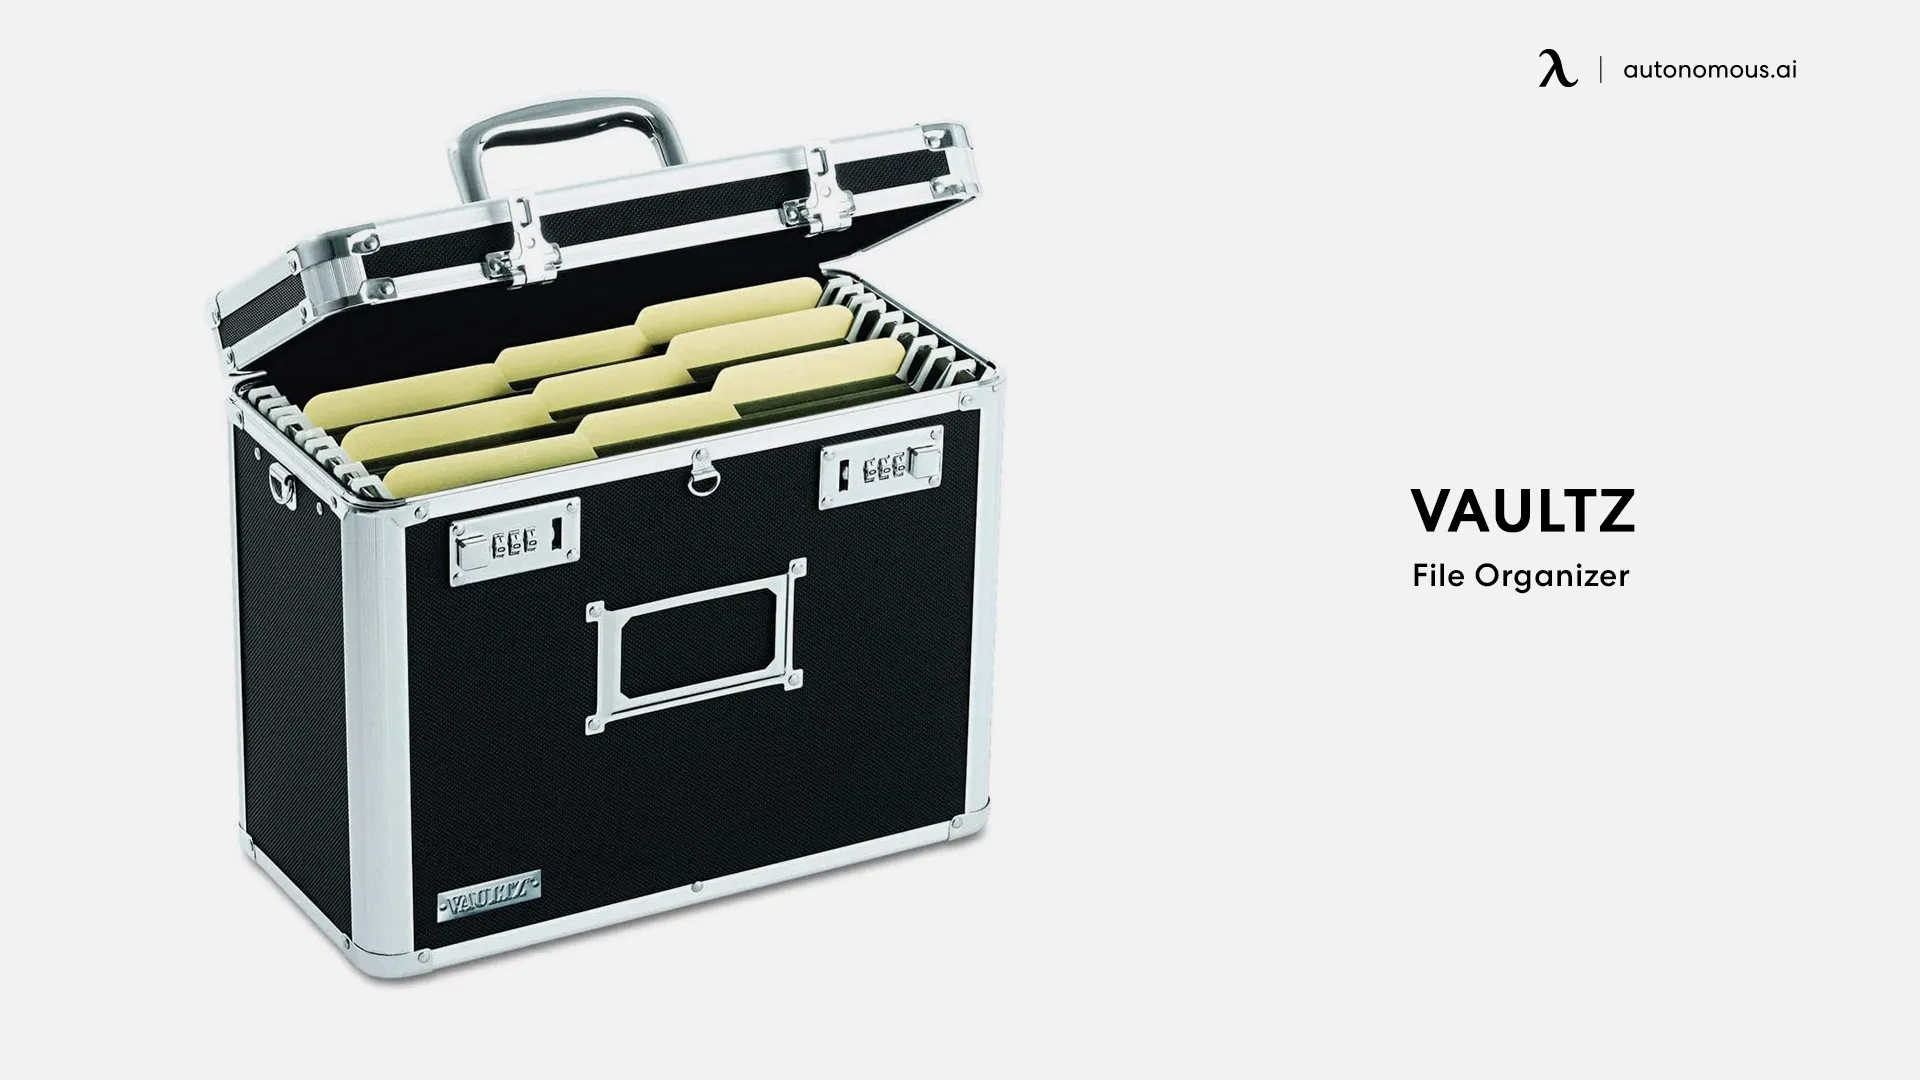 Vaultz’ portable office organizer